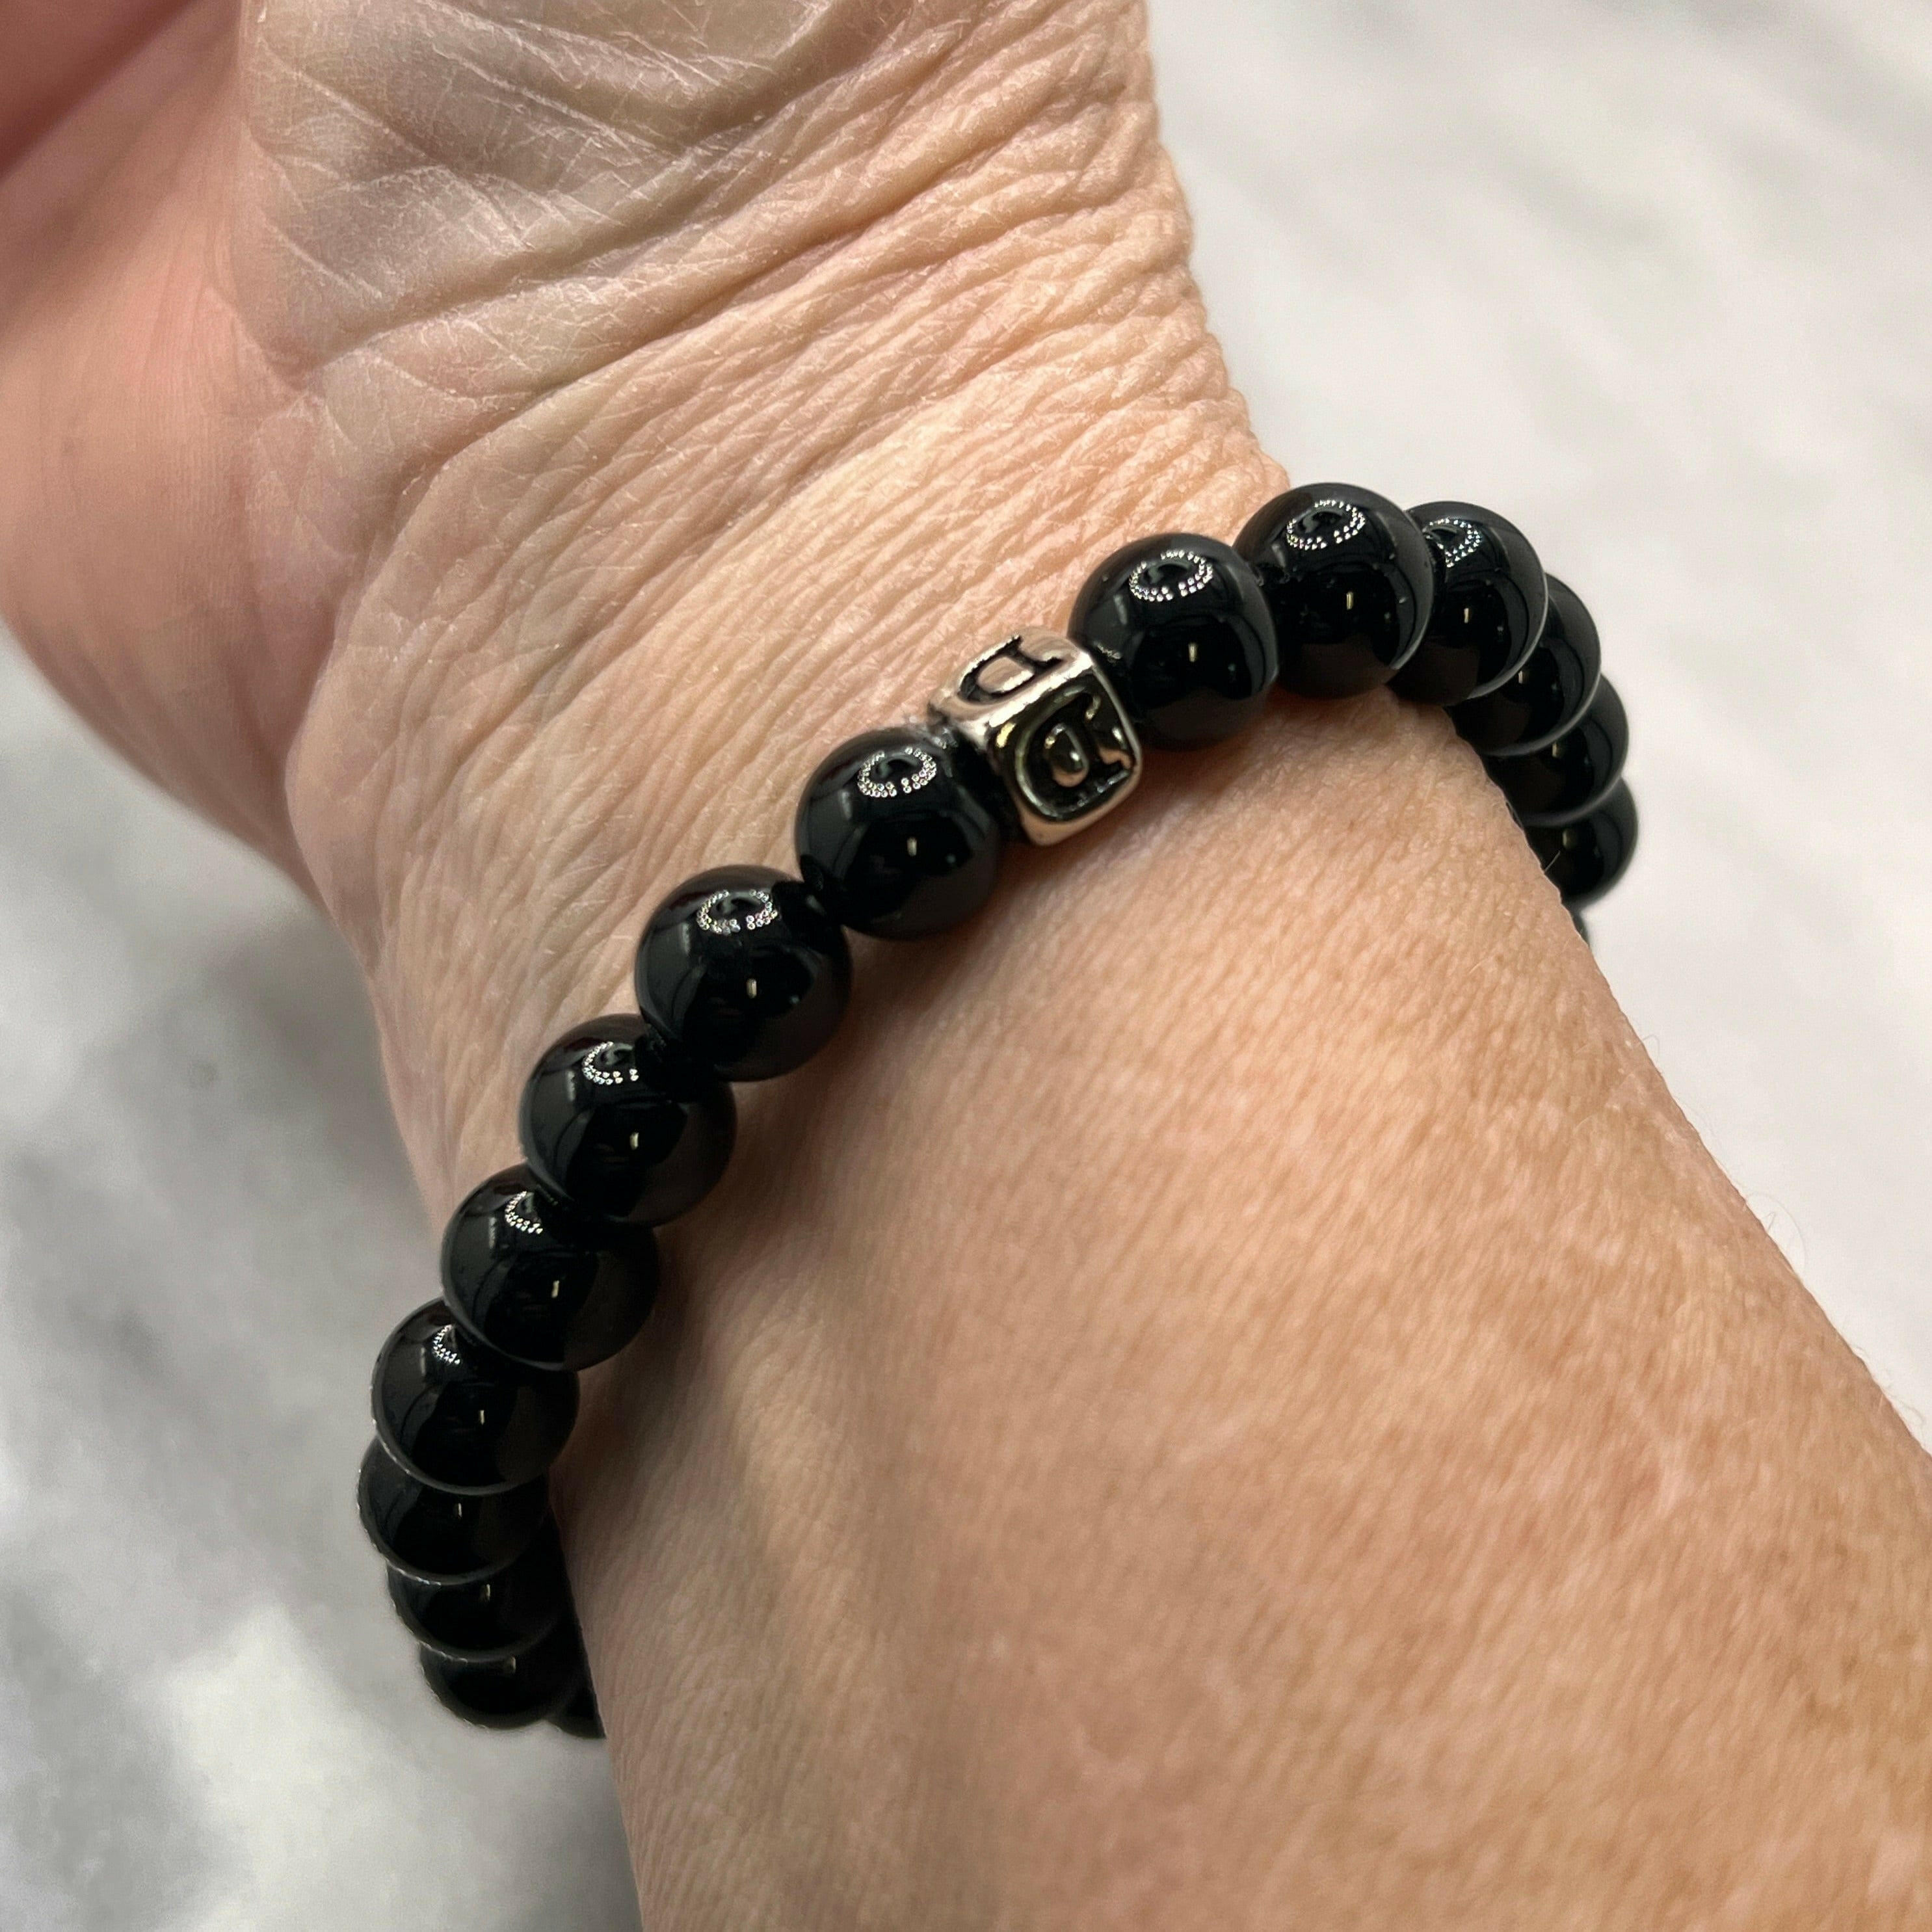 Handcrafted Black Onyx personalized bracelet for elegant style